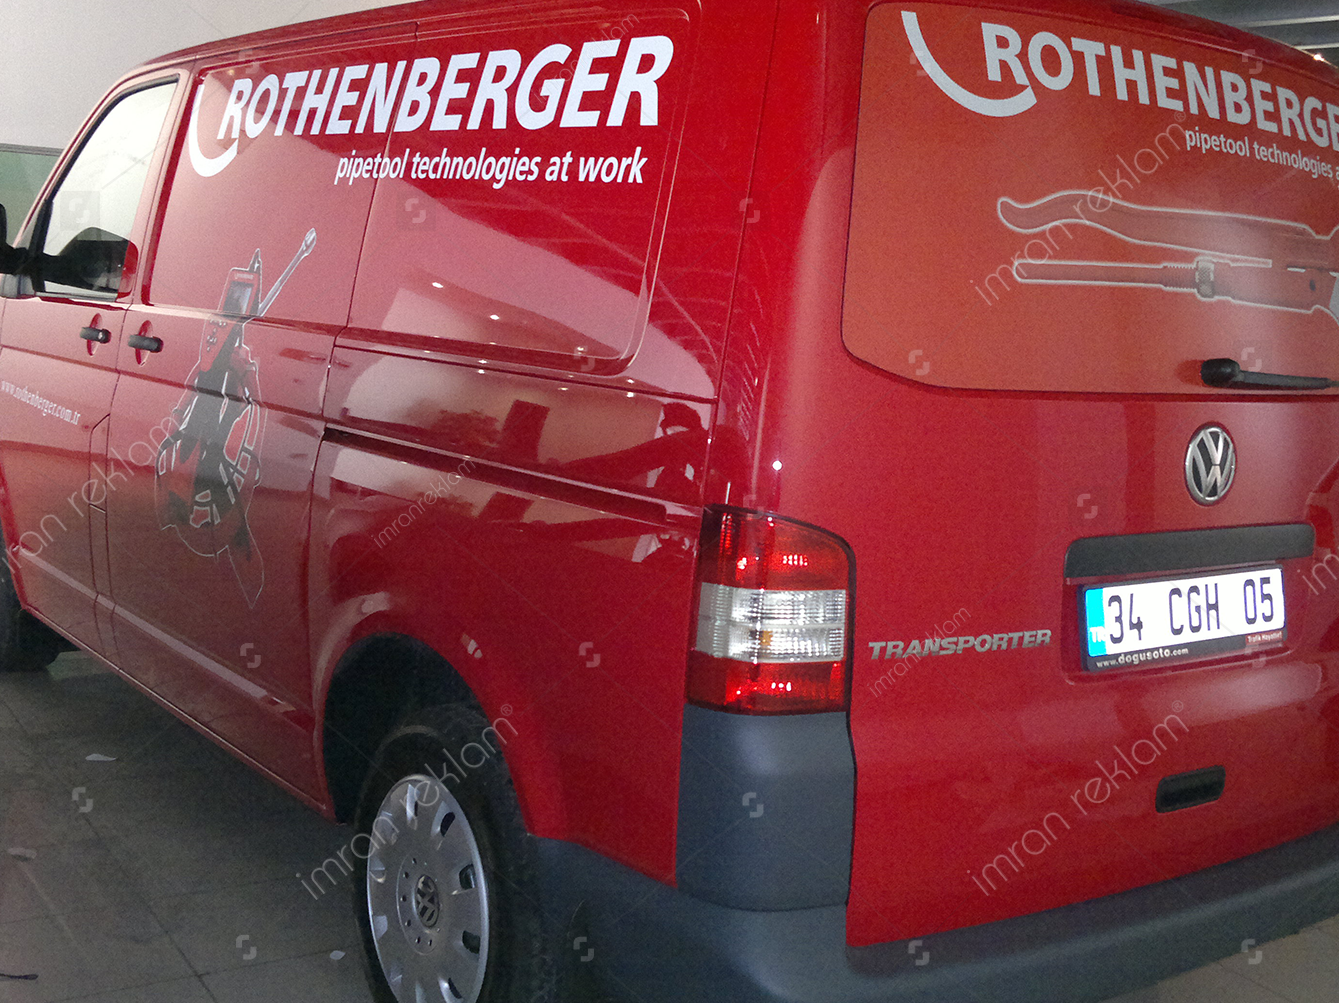 rothenberger-voswagen-transporter-arac-giydirme